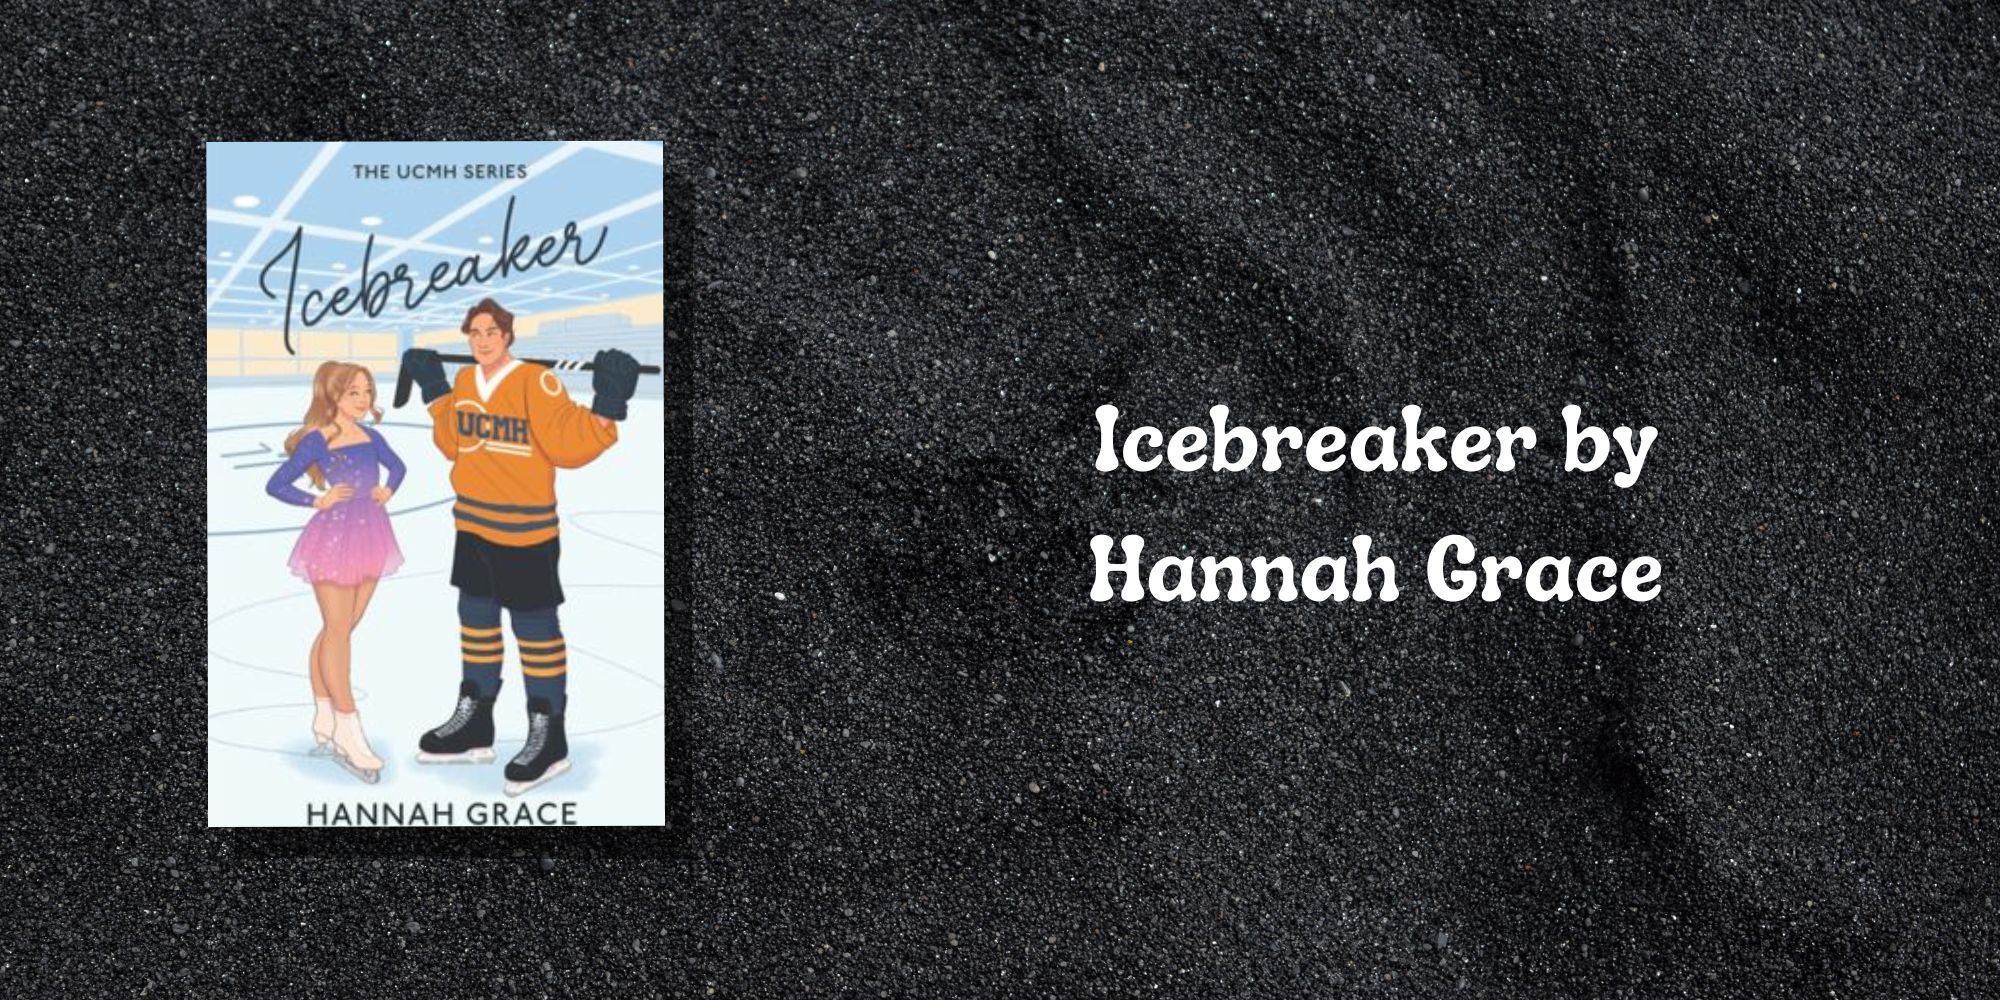 The Icebreaker title by Hannah Grace